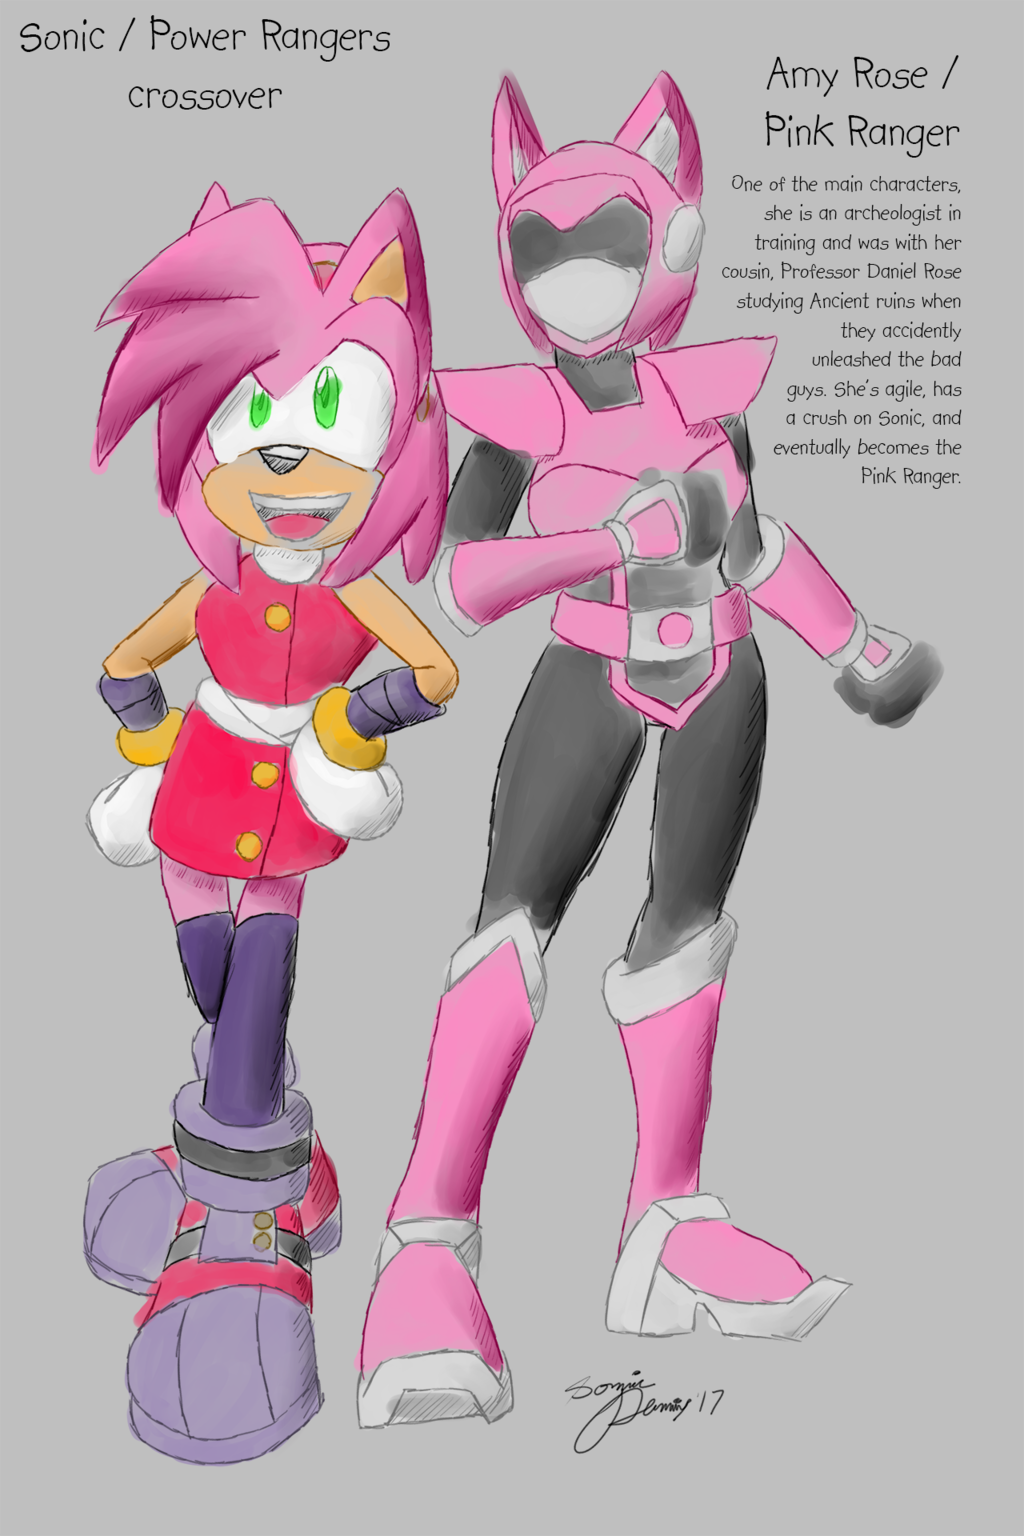 Sonic x Power Rangers - Amy Rose/Pink Ranger